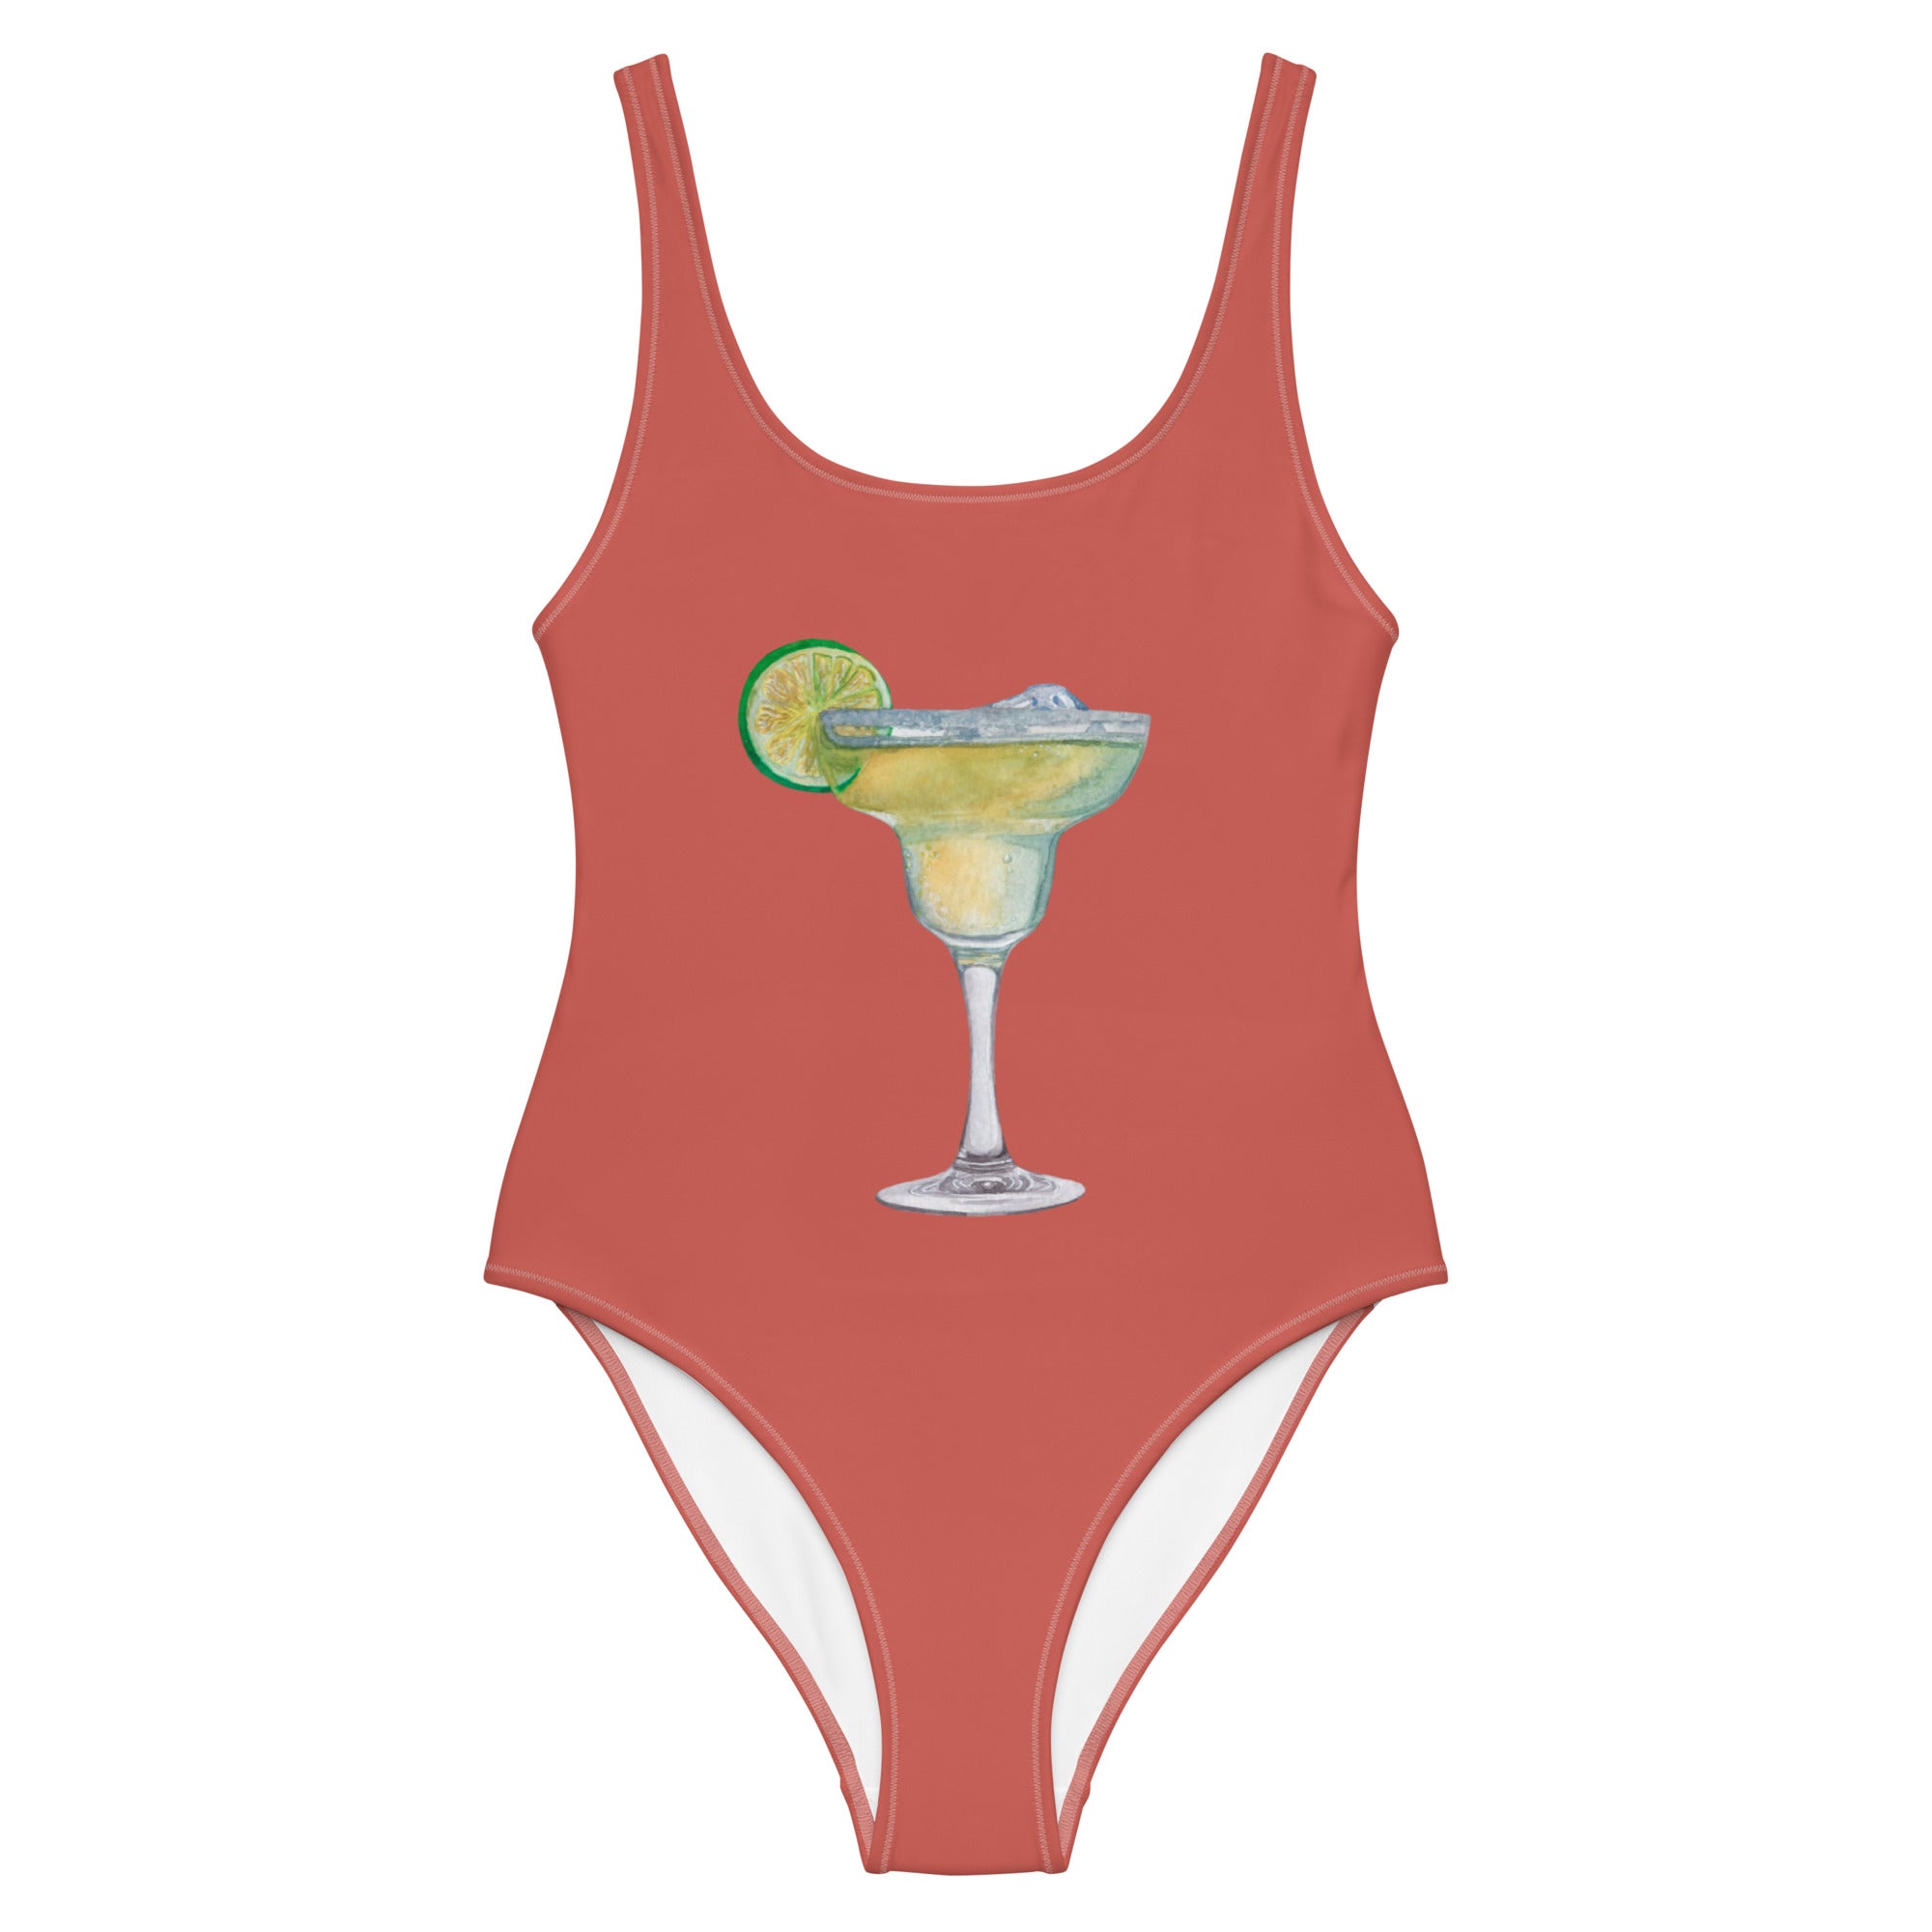 The Margarita Club - Swimsuit - The Refined Spirit